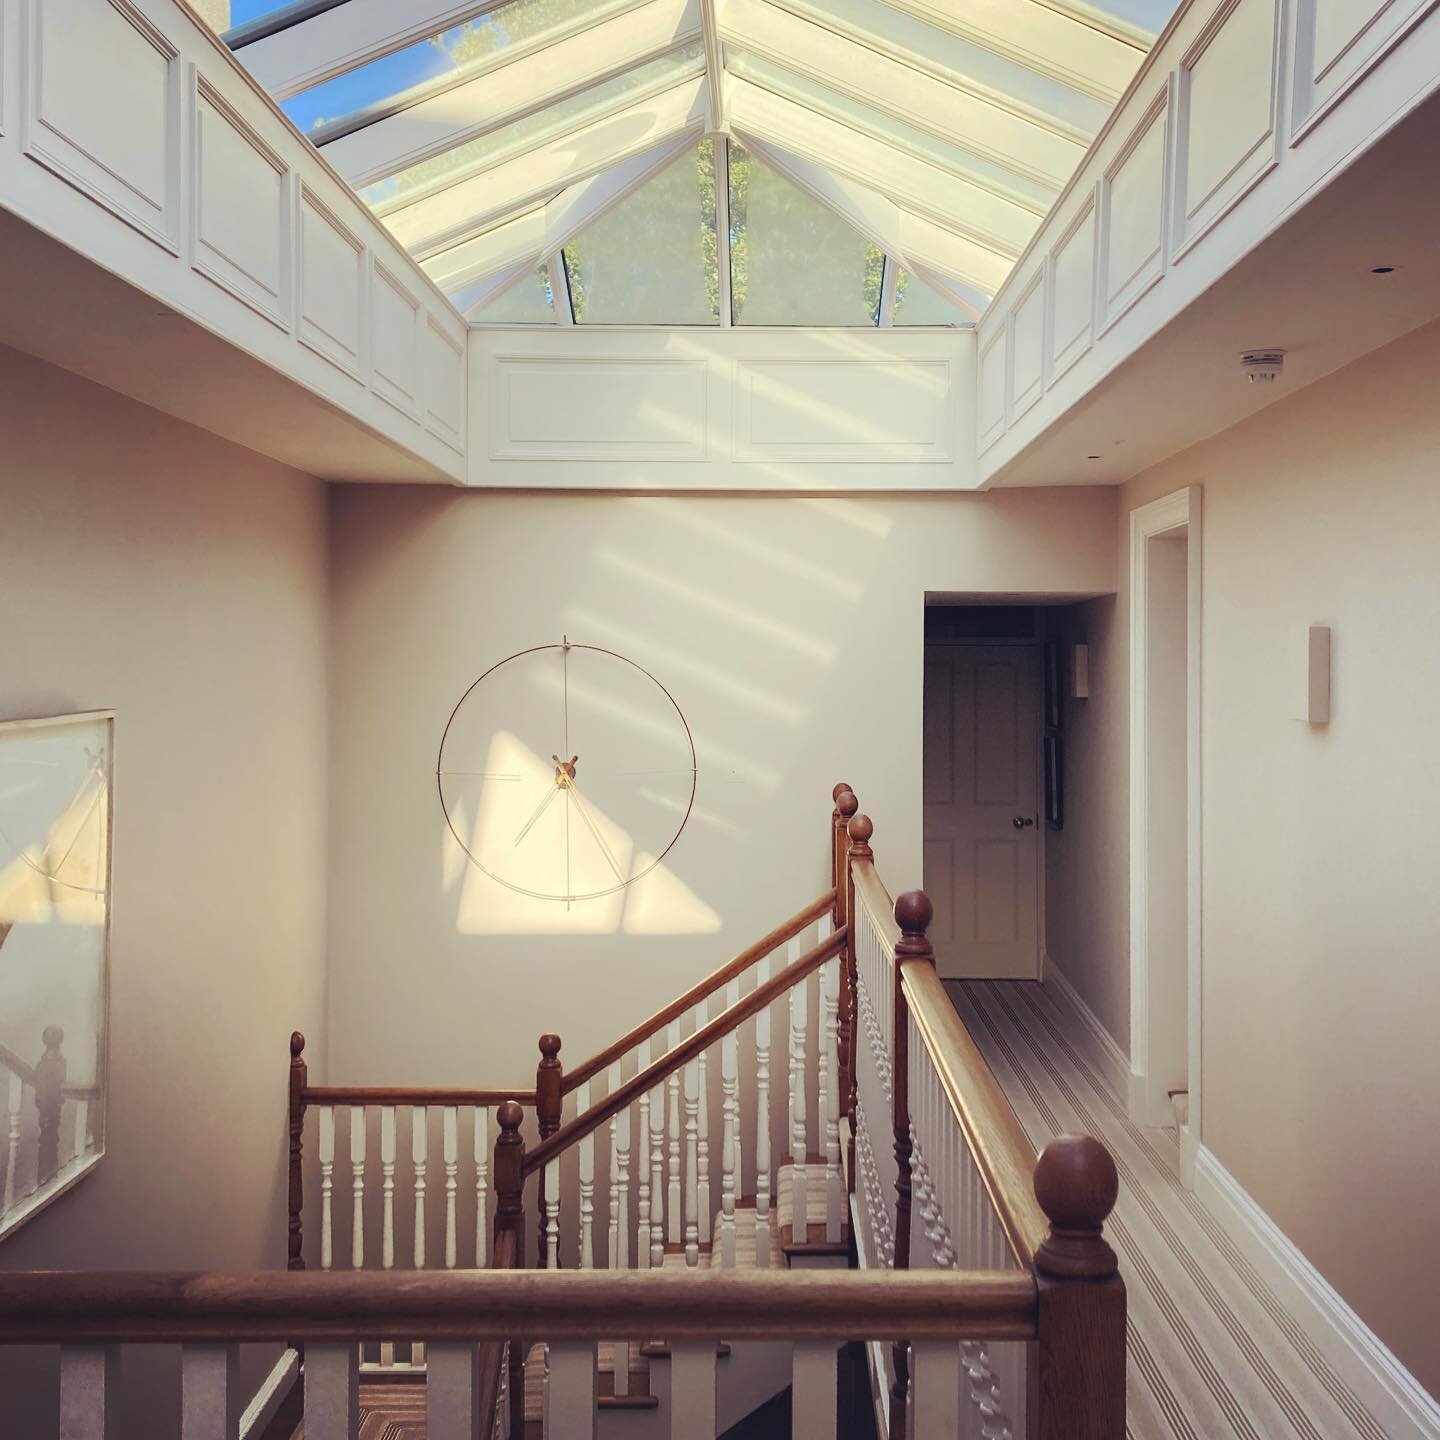 Still looking good!
#autometry_ltd #architecture #rooflight #refurbishment #interiordesign #stairs